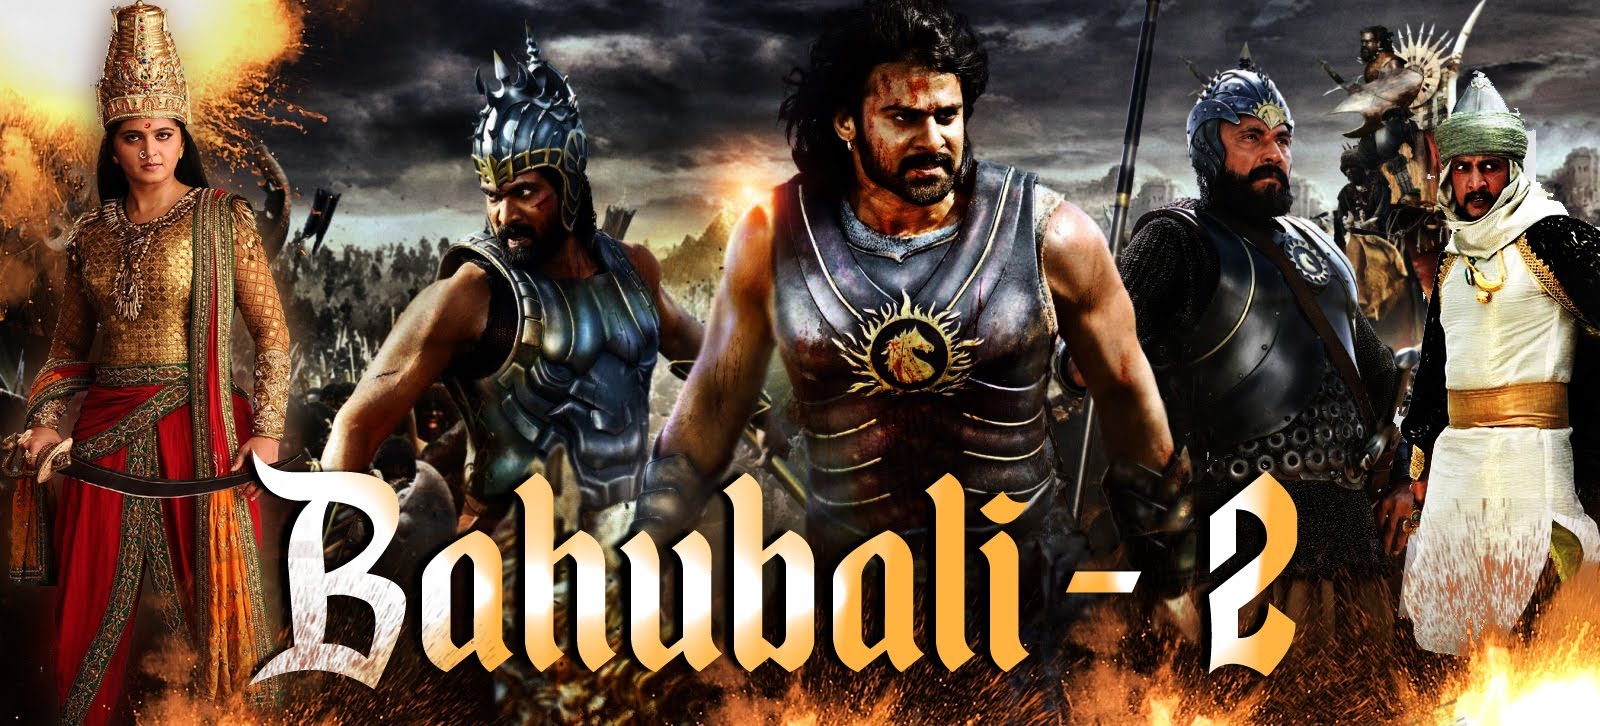 Bahubali 2 created history